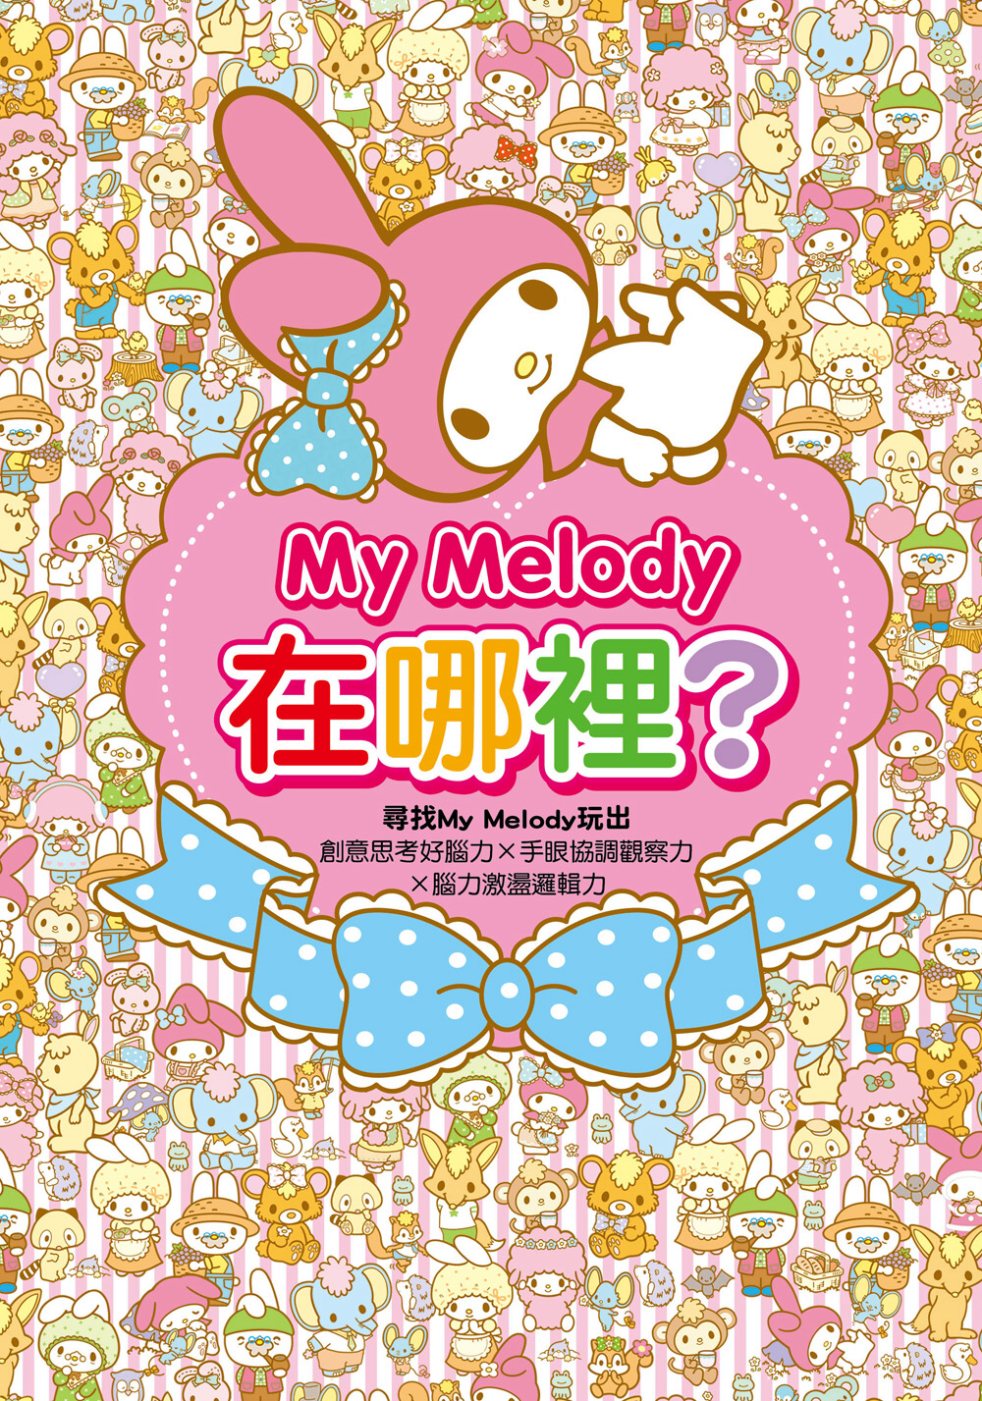 My Melody在哪裡？